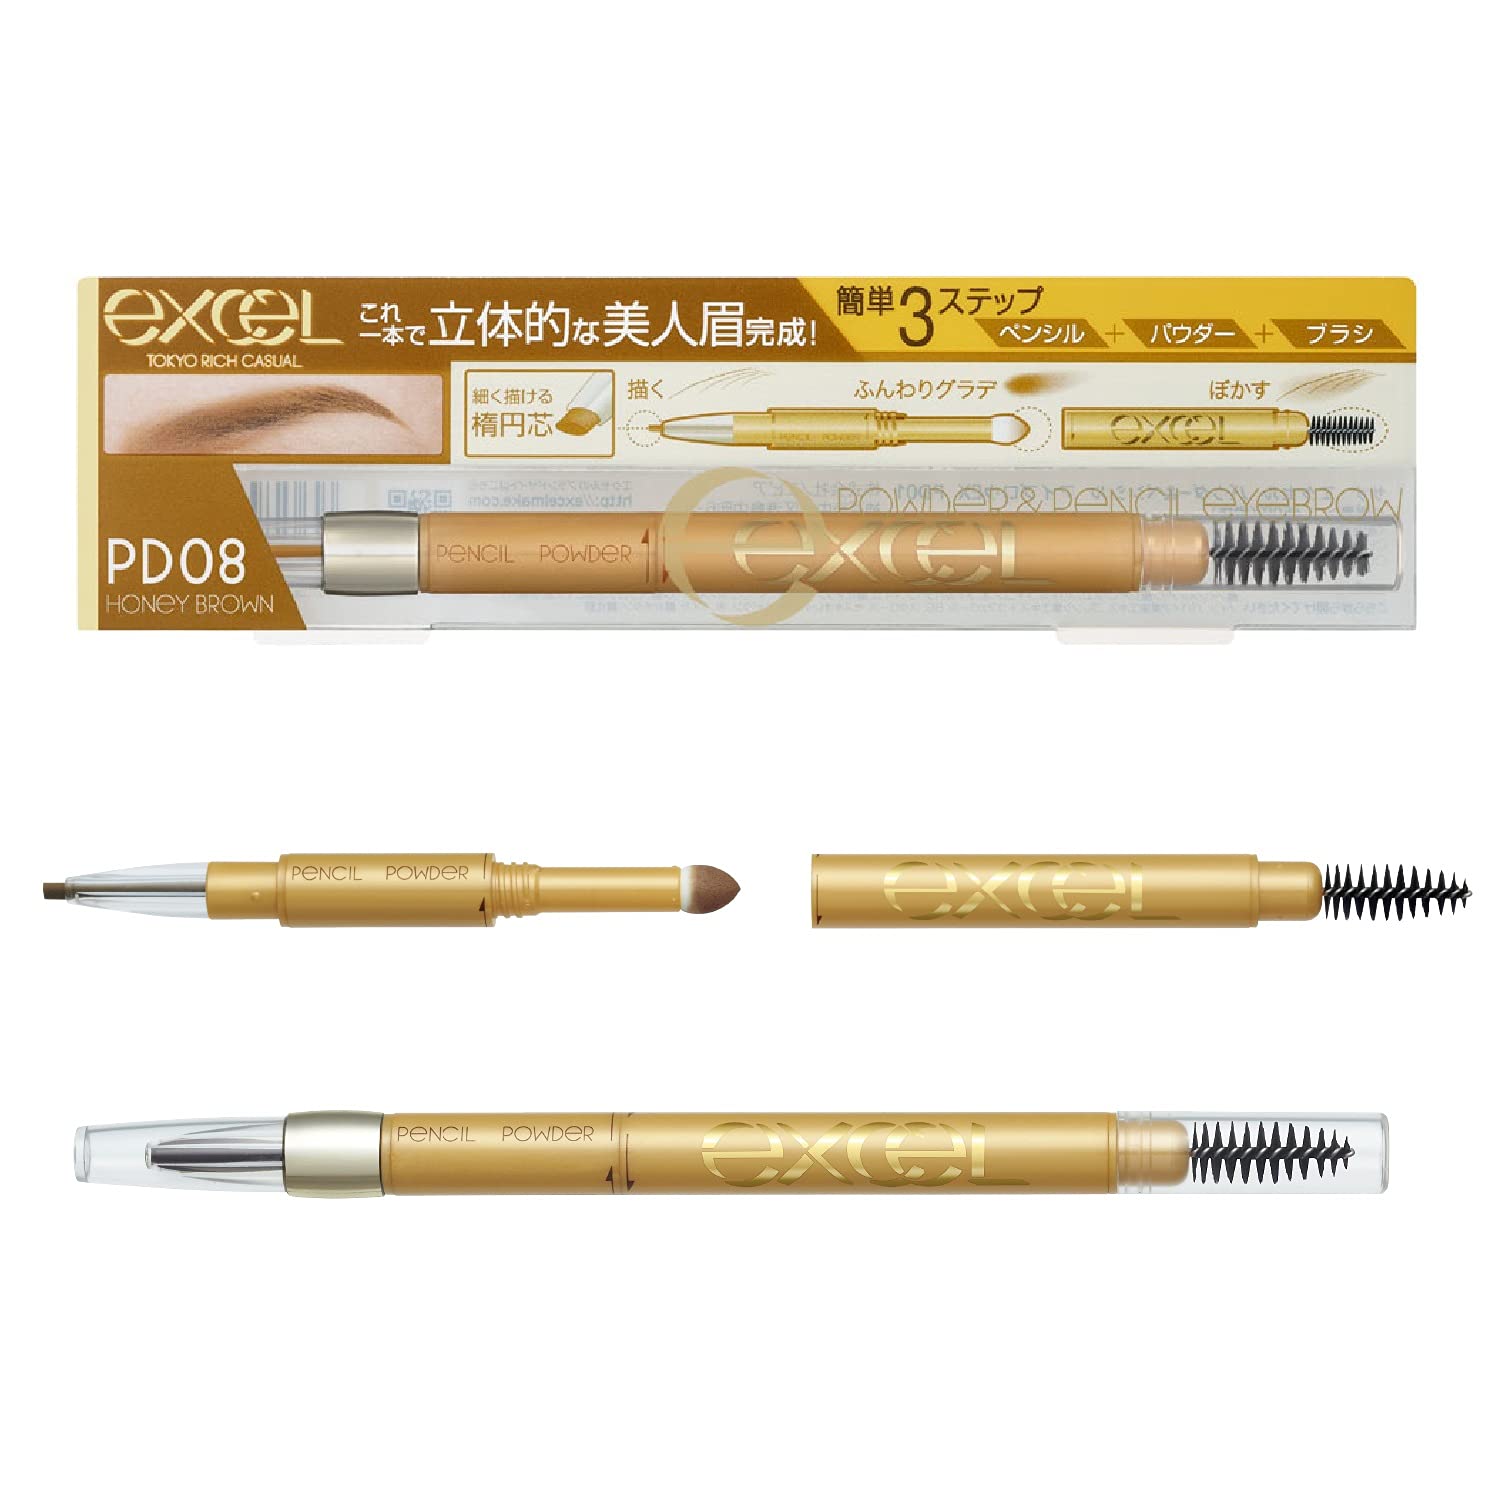 Excel Powder & Pencil Eyebrow EX PD08 (Honey Brown) 3 - in - 1 - Japanese Eyebrow